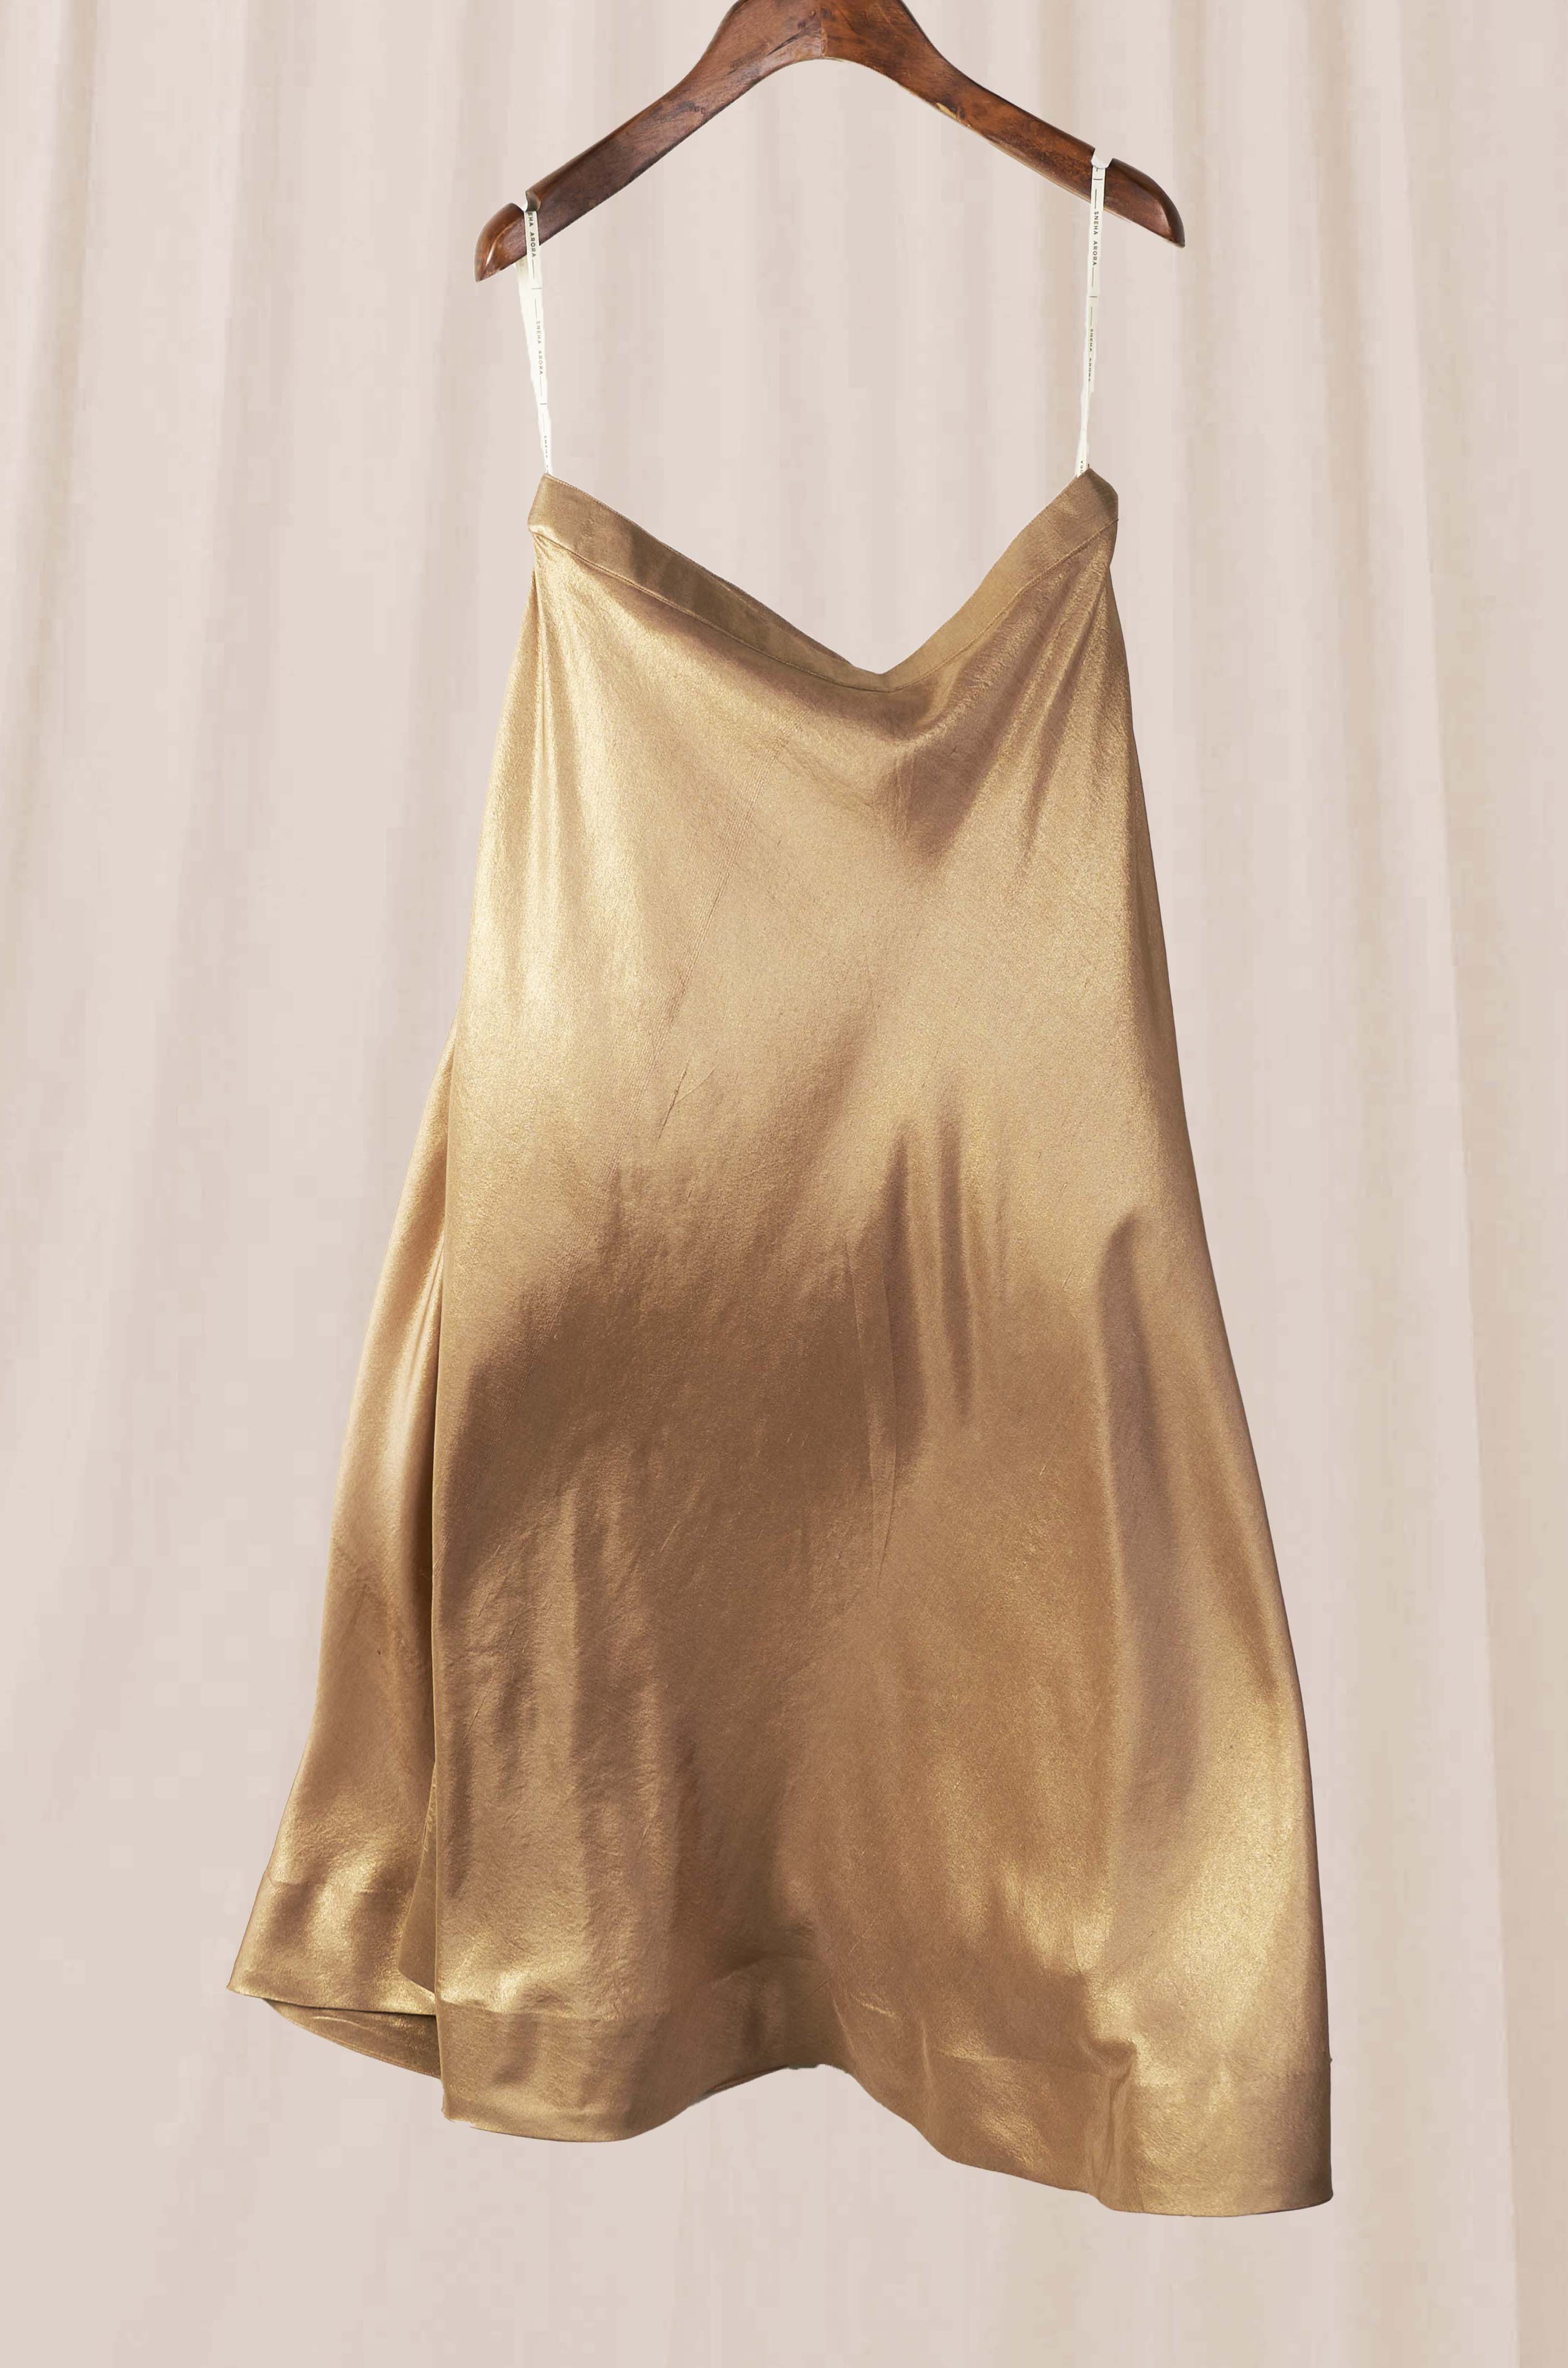 Outshine Gold Bias Skirt